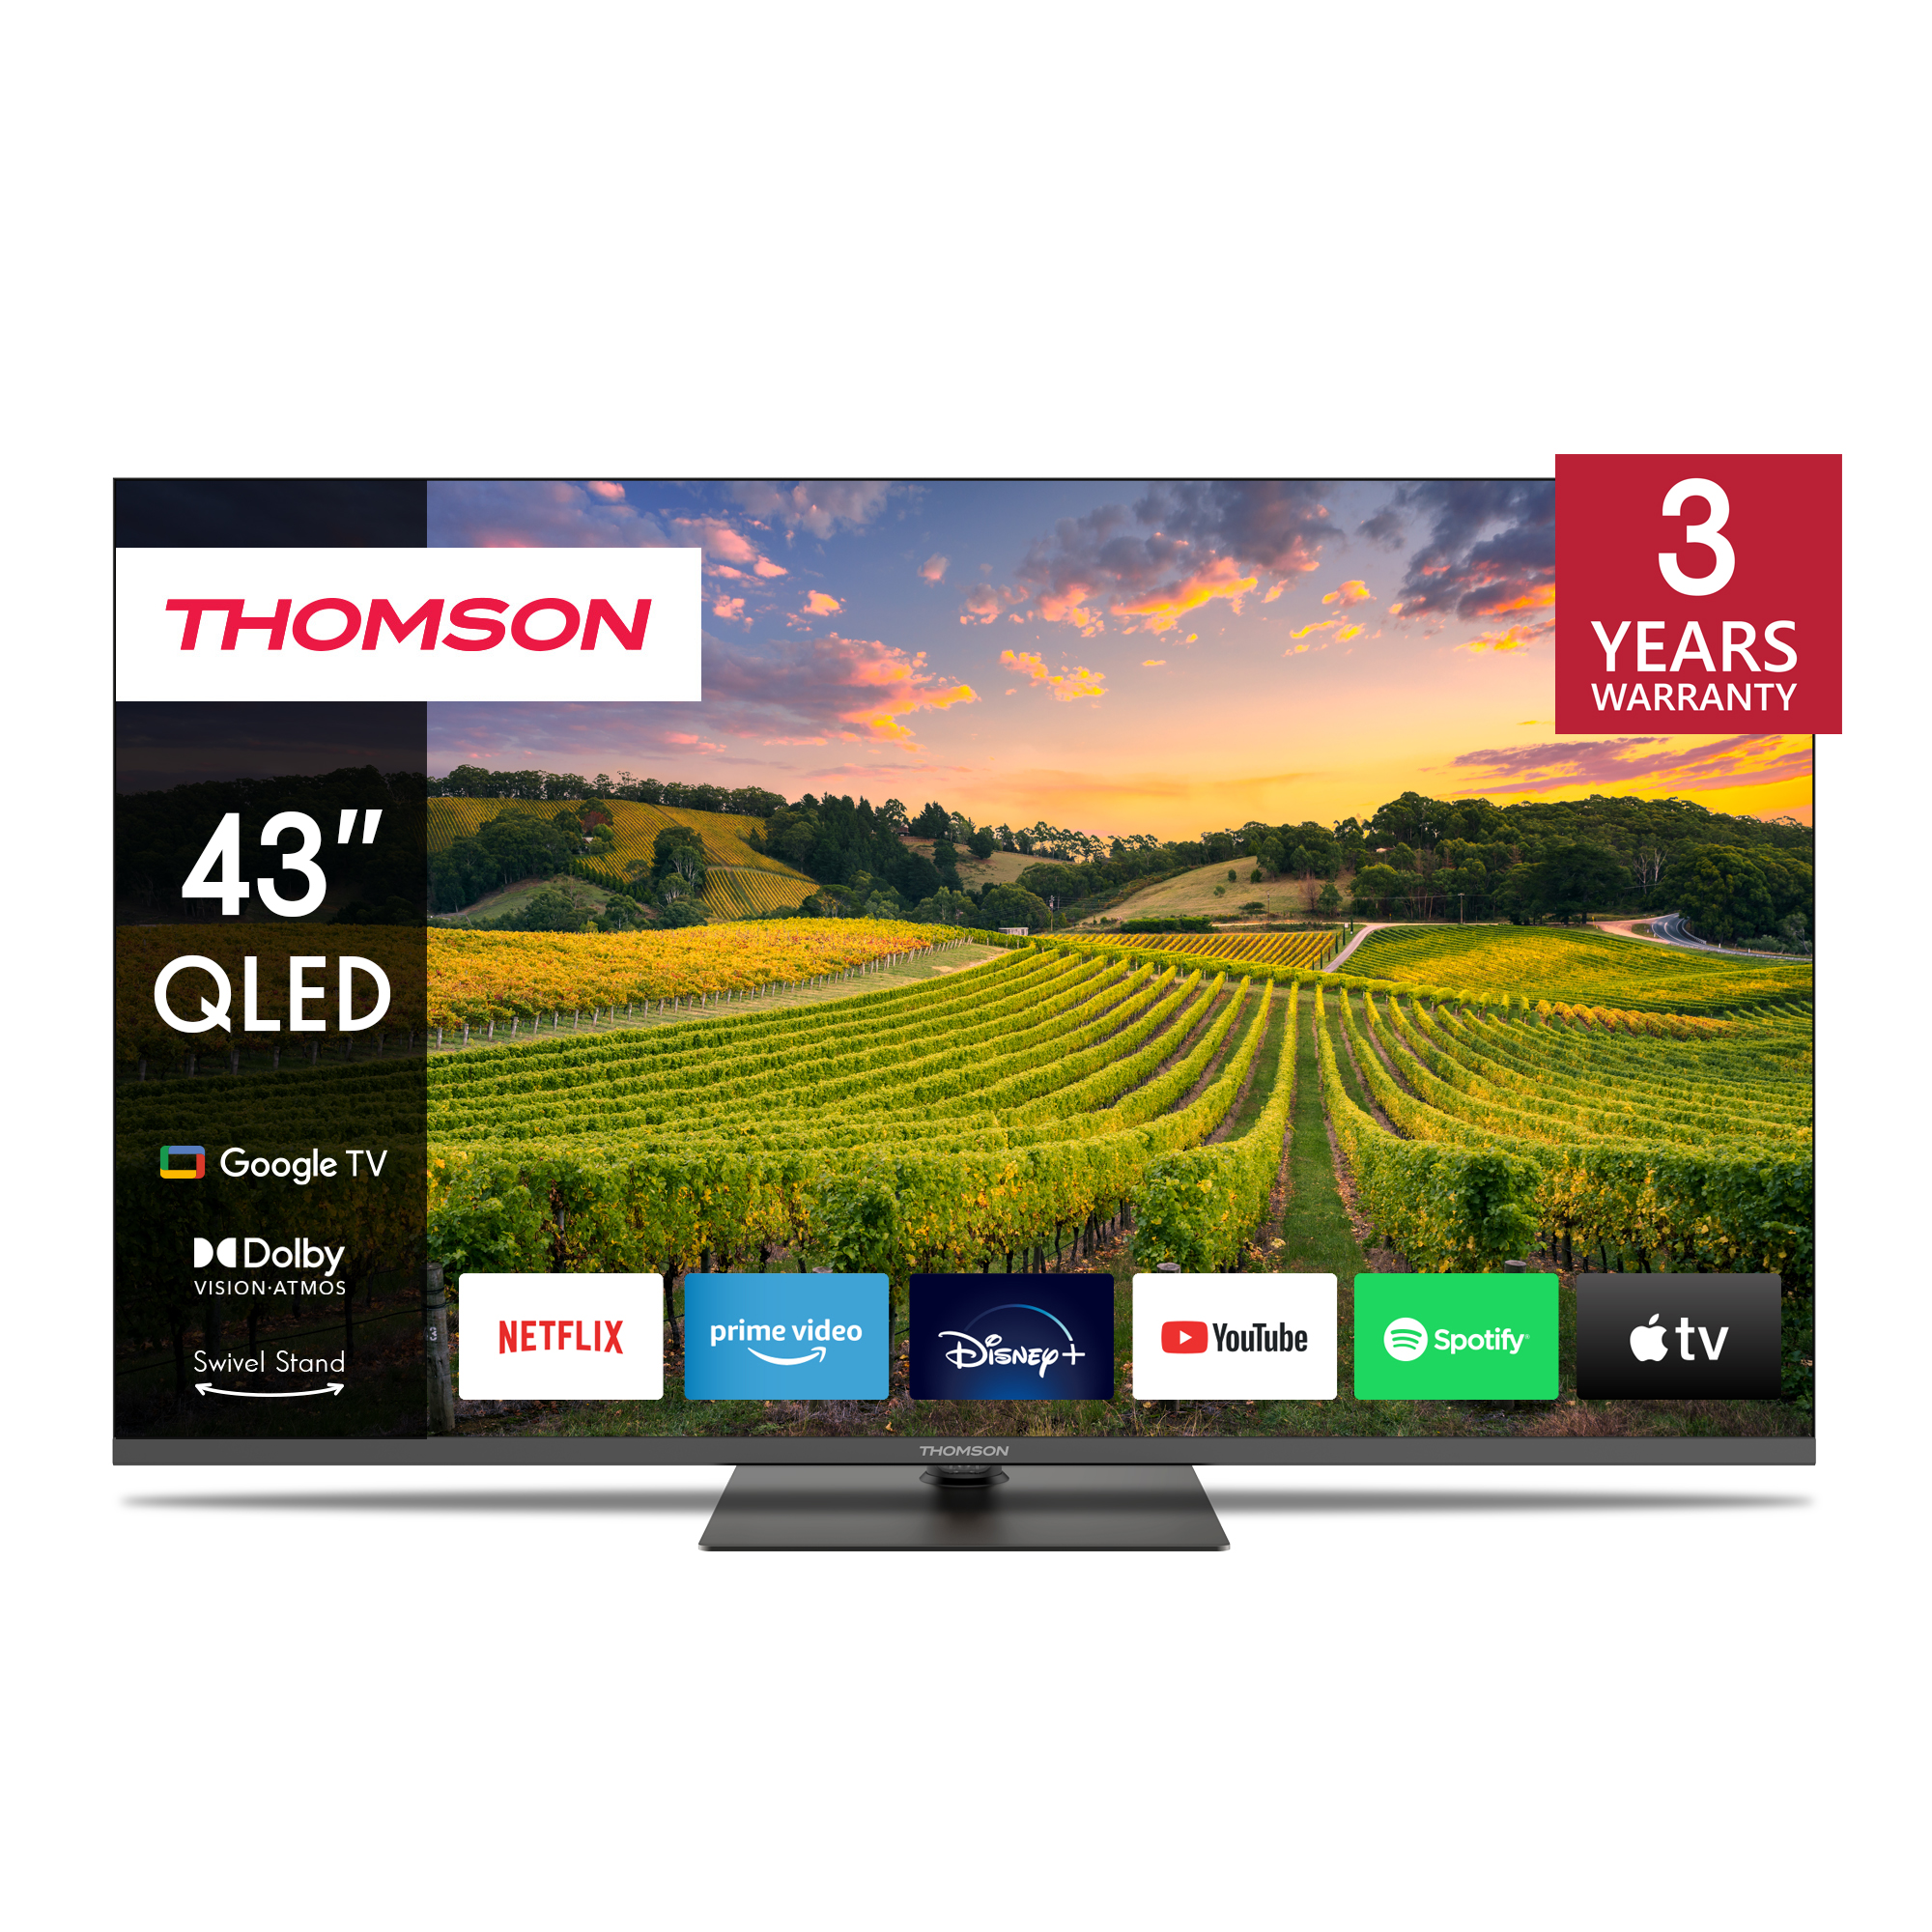 Thomson 43QG5C14 QLED Google TV